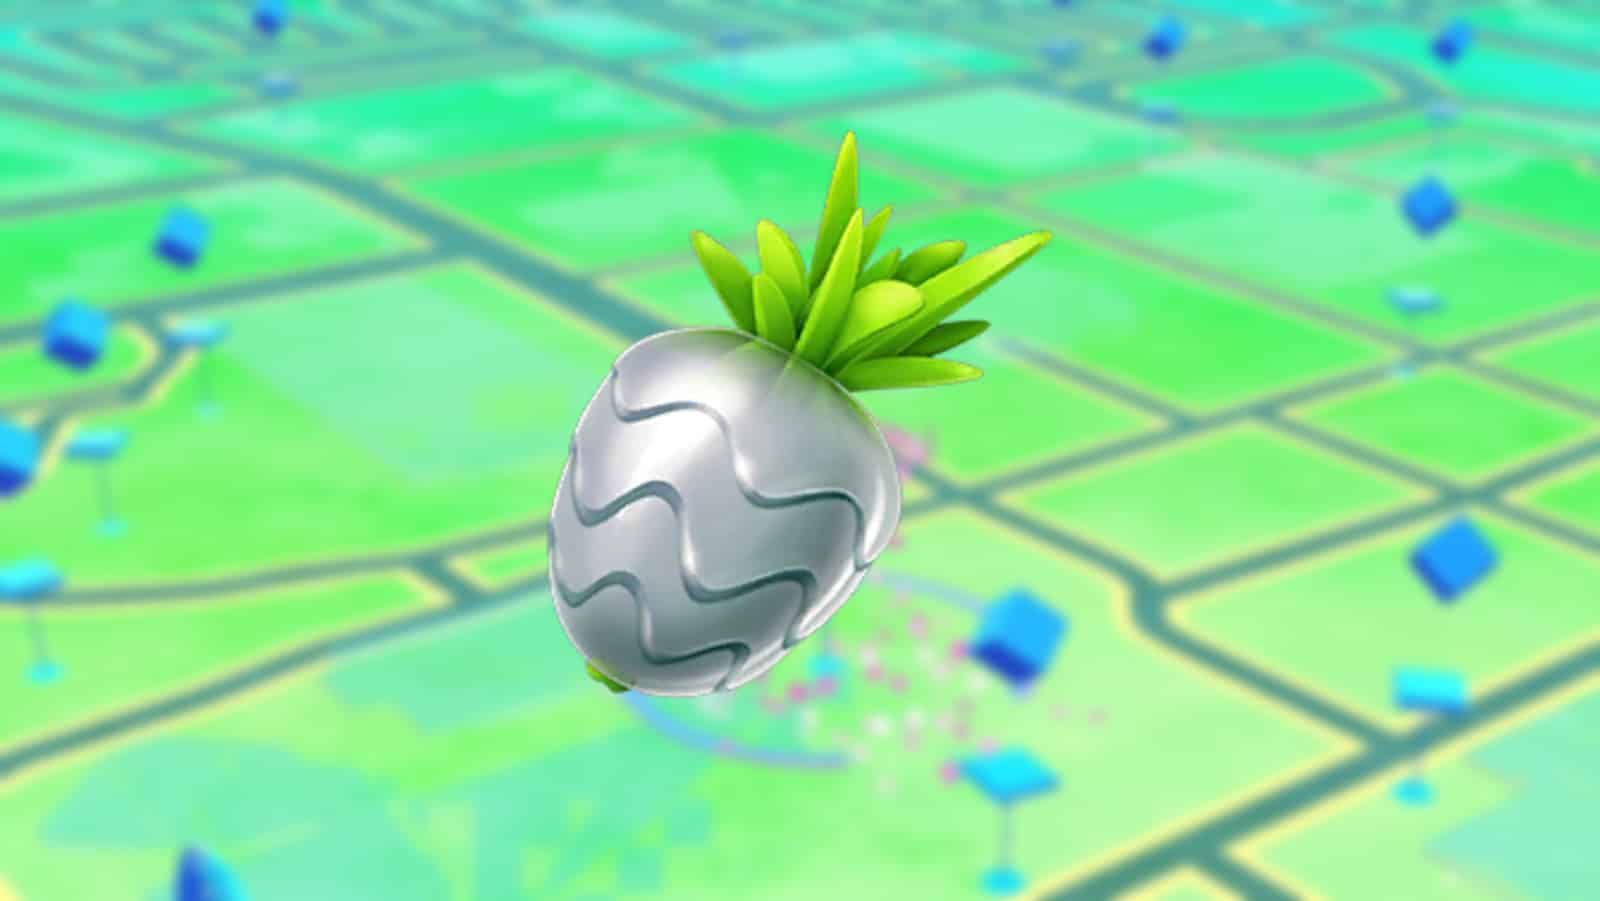 Pokemon Go Silver Pinap Berry